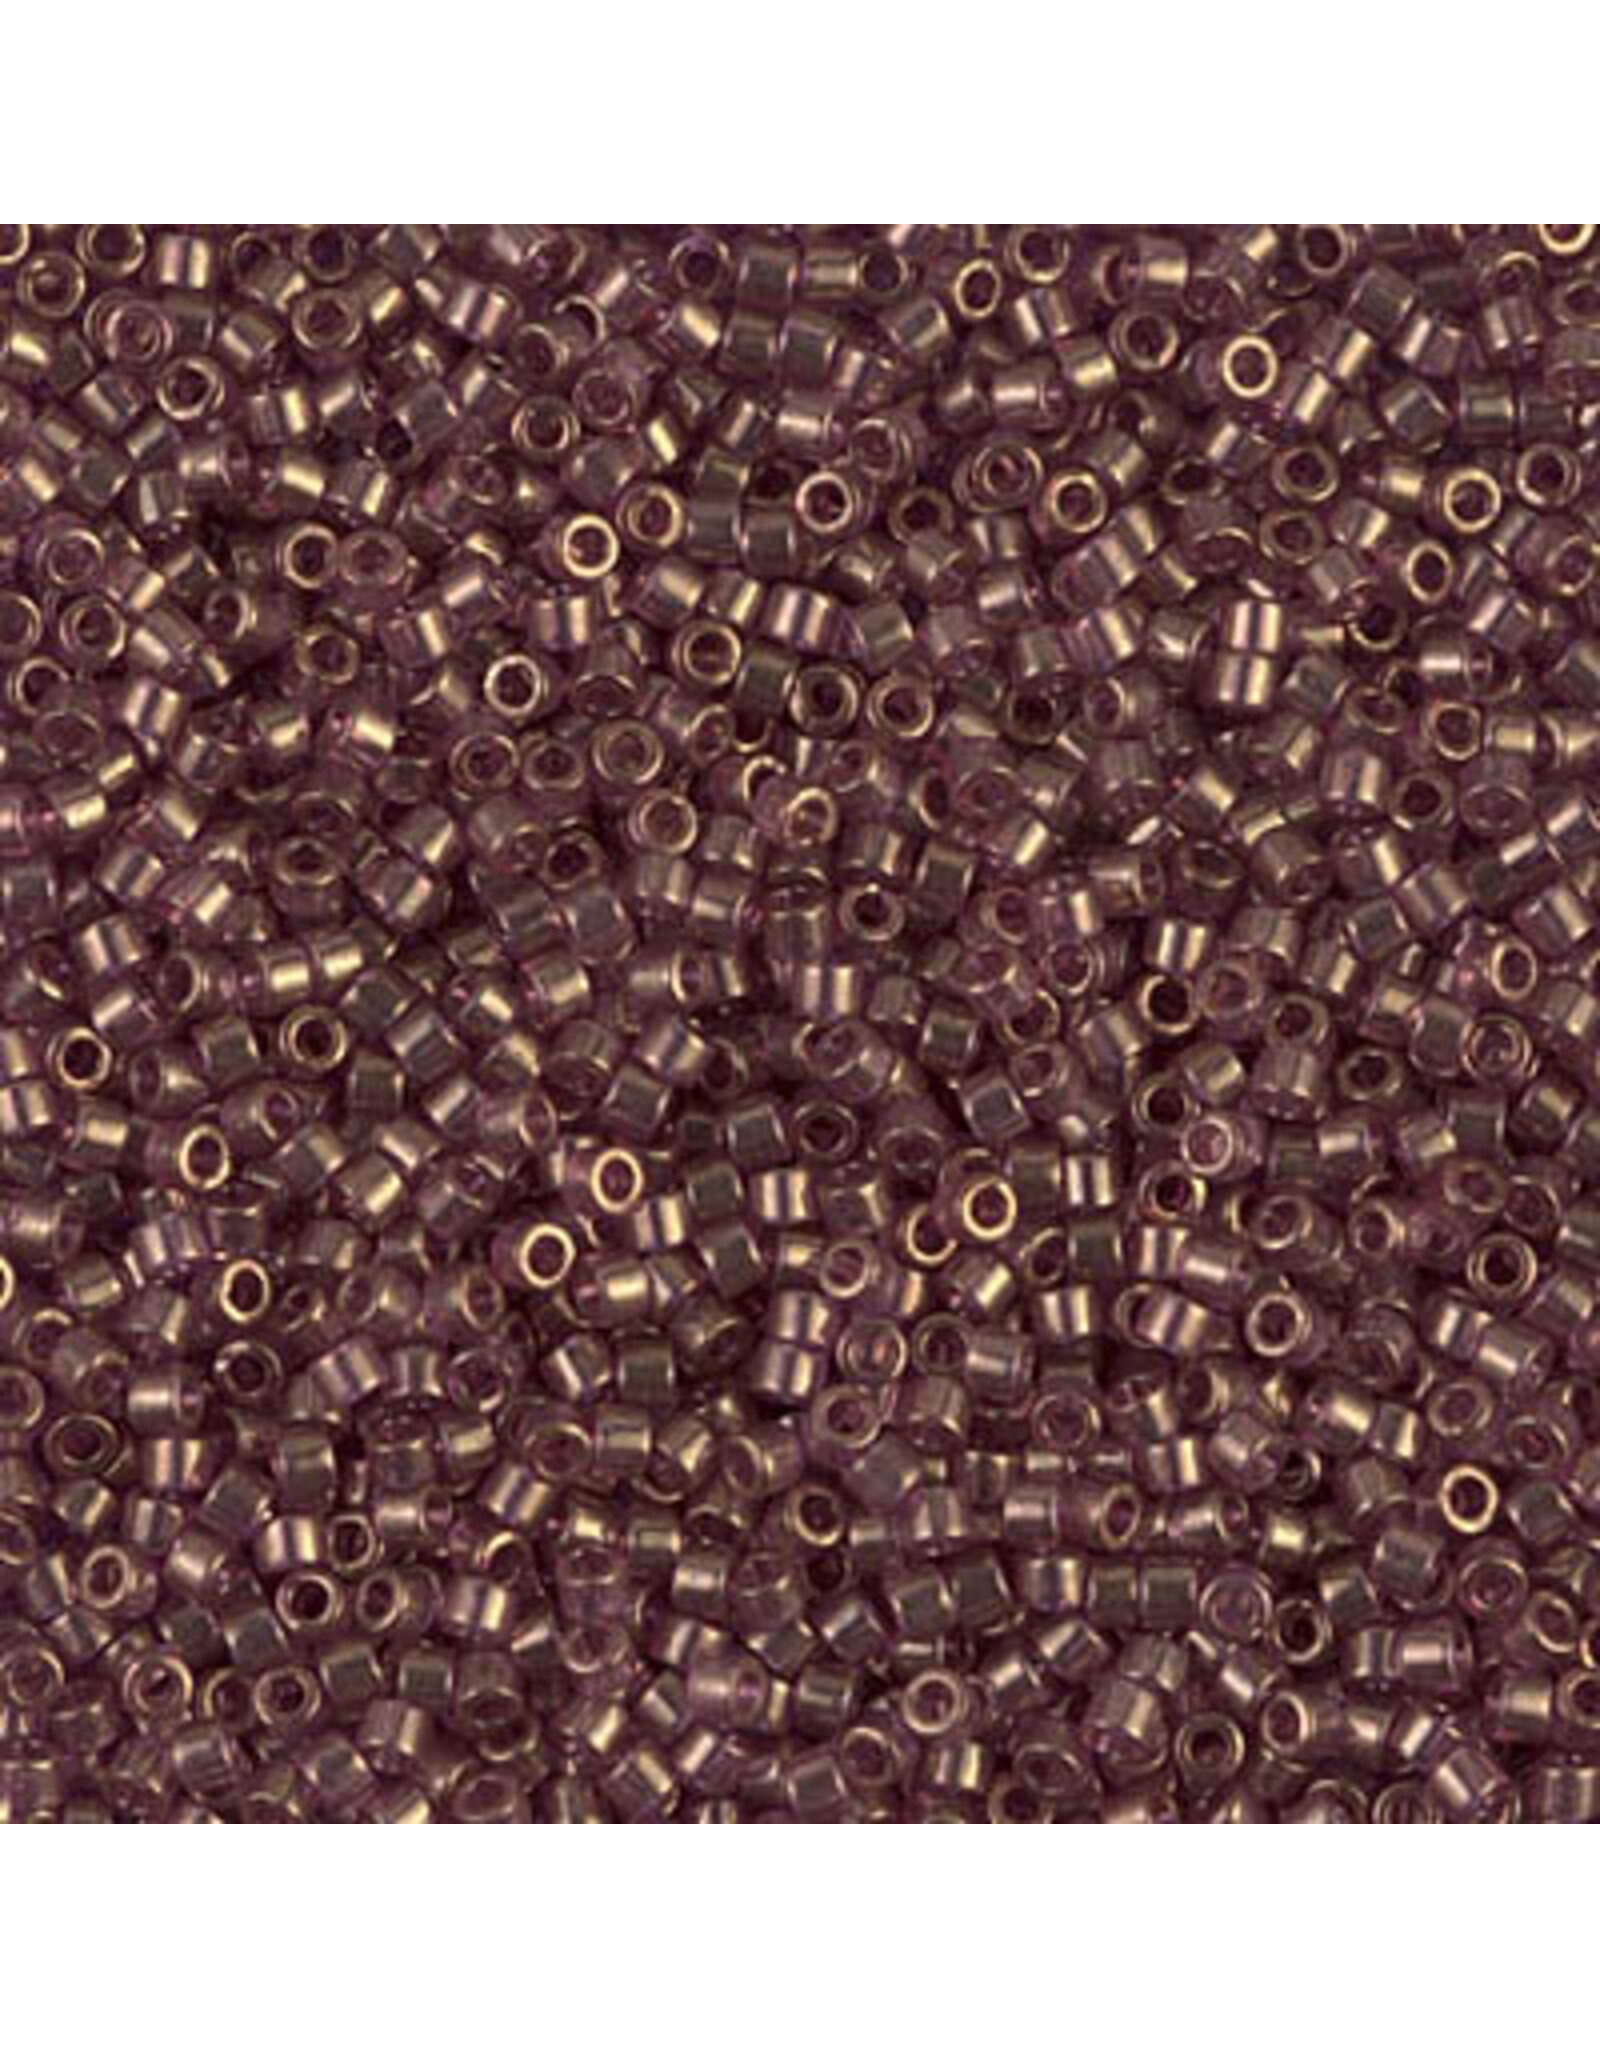 db108 11 Delica 3.5g  Amethyst Purple Gold Lustre